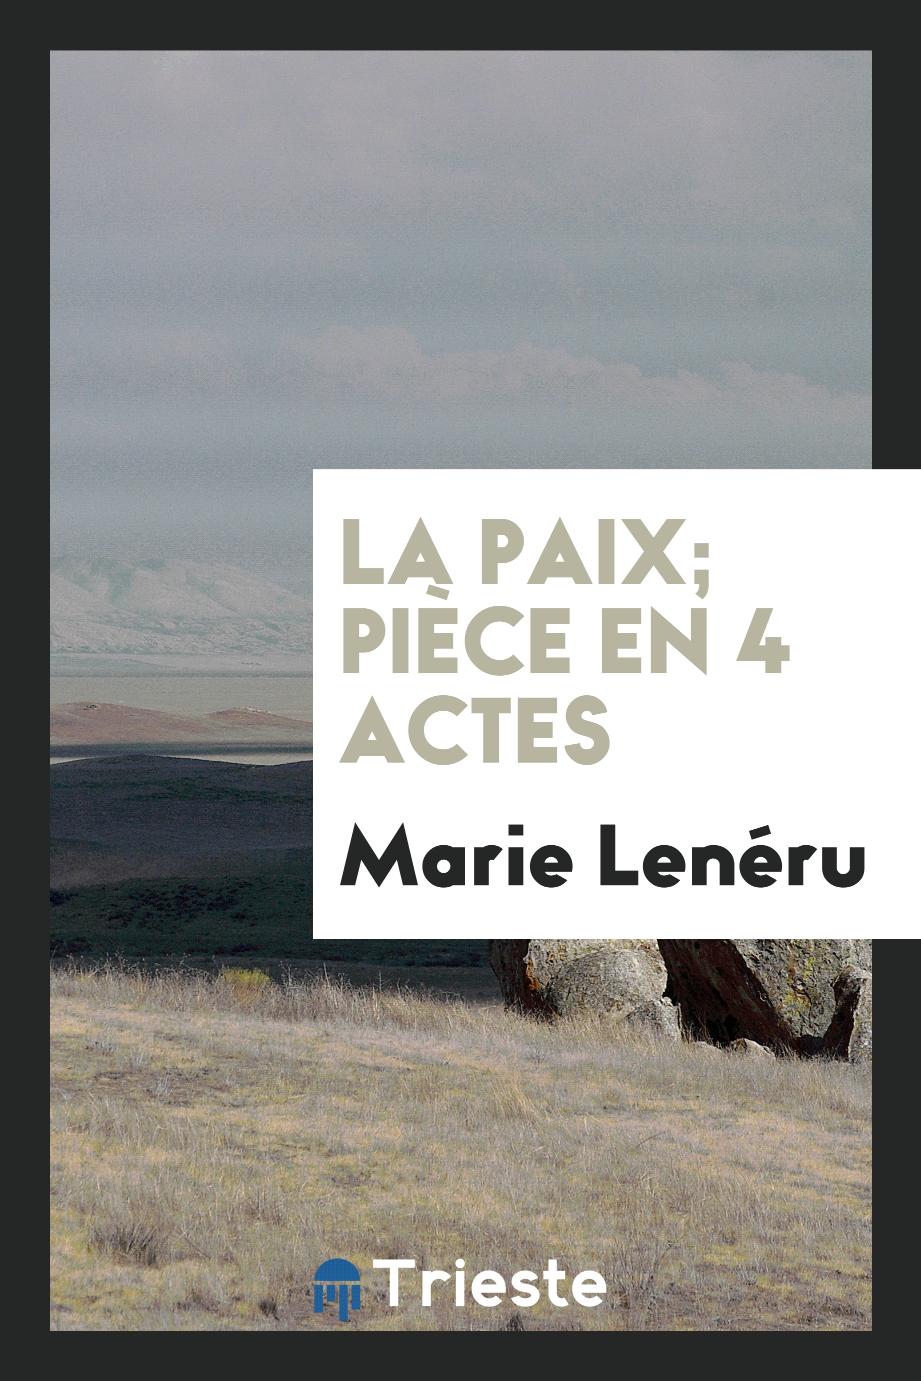 Marie Lenéru - La paix; pièce en 4 actes